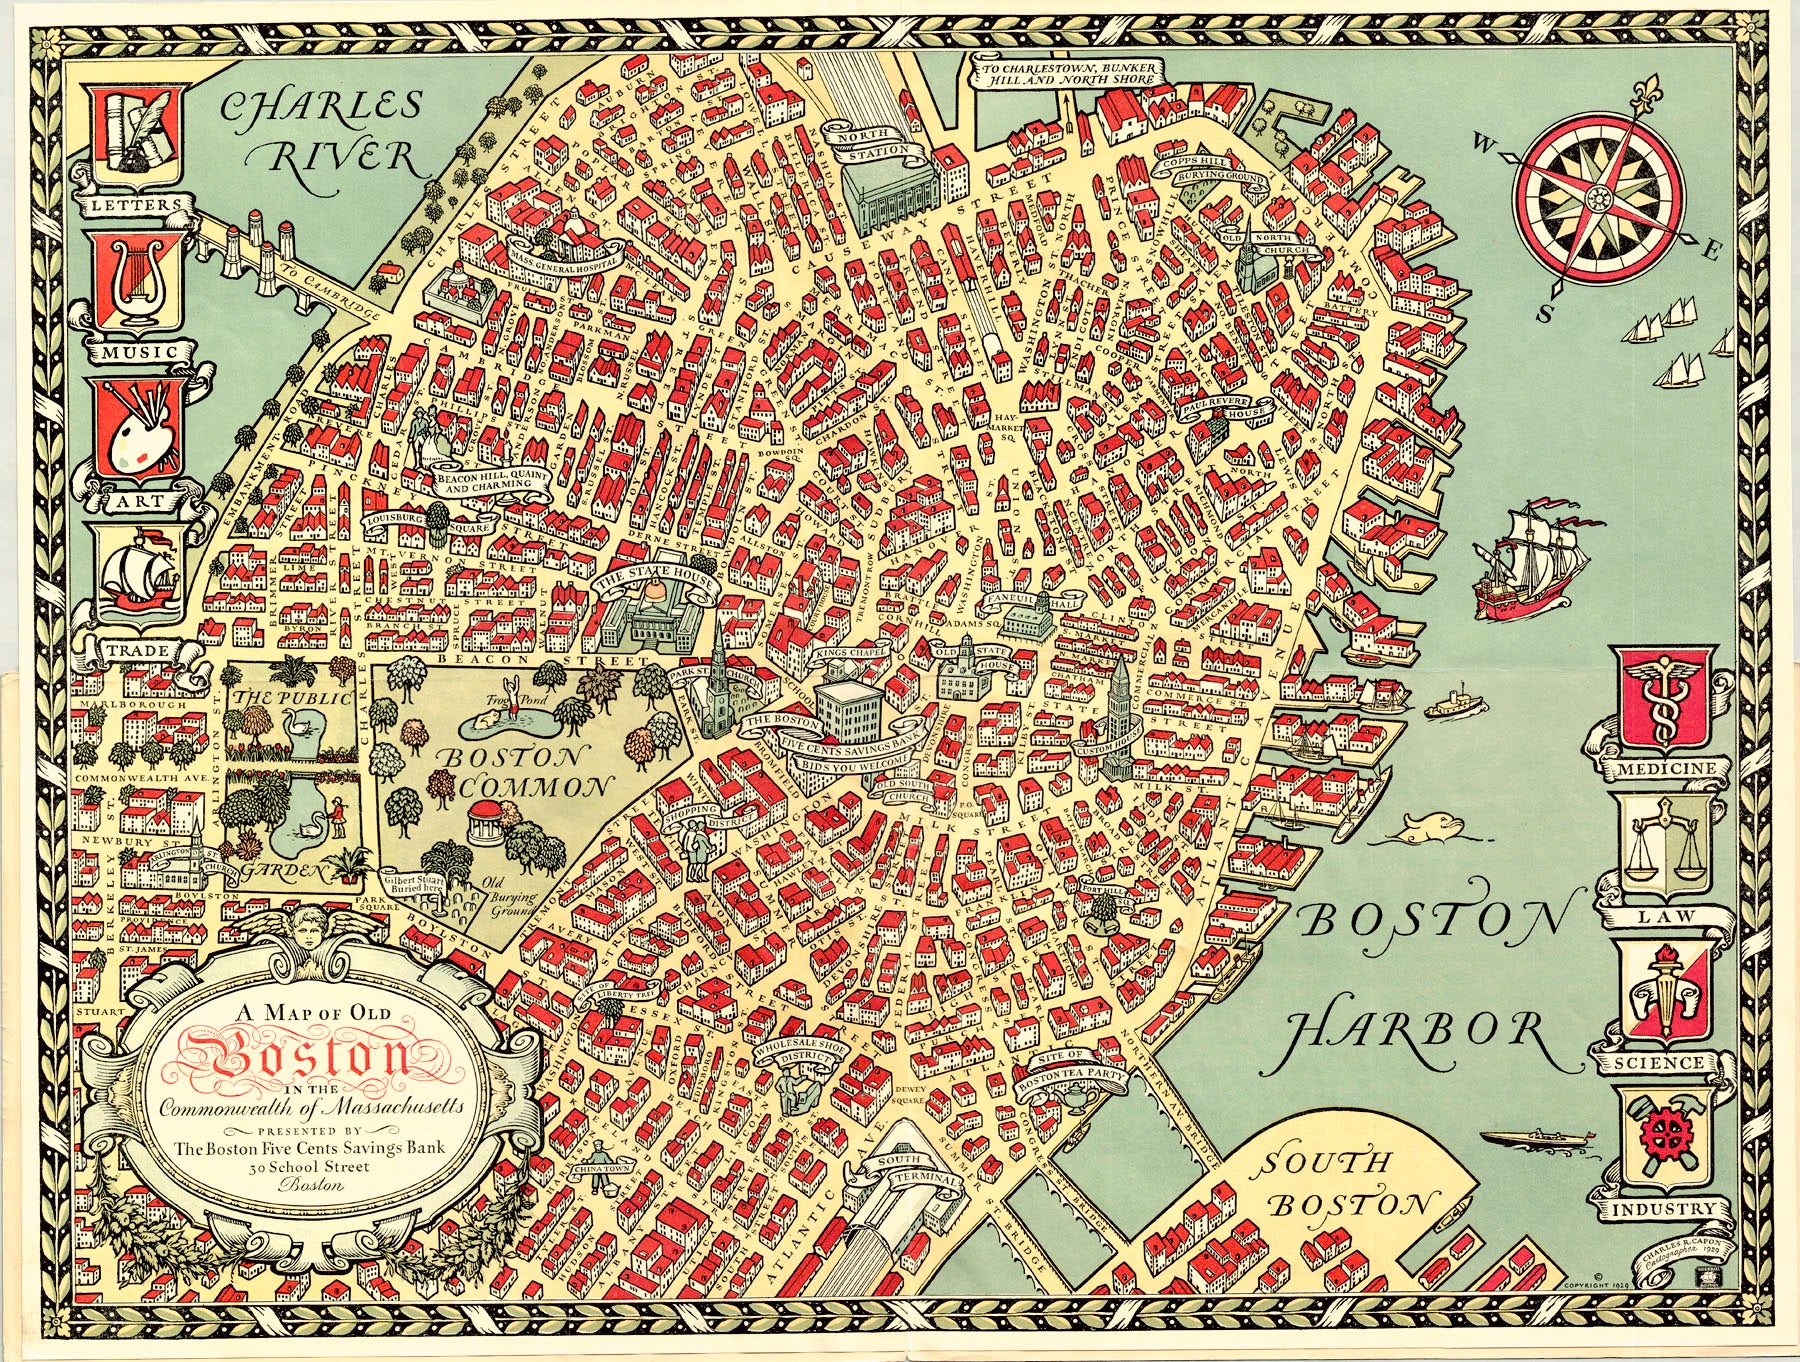 (MA.-Boston) A Map of Old Boston